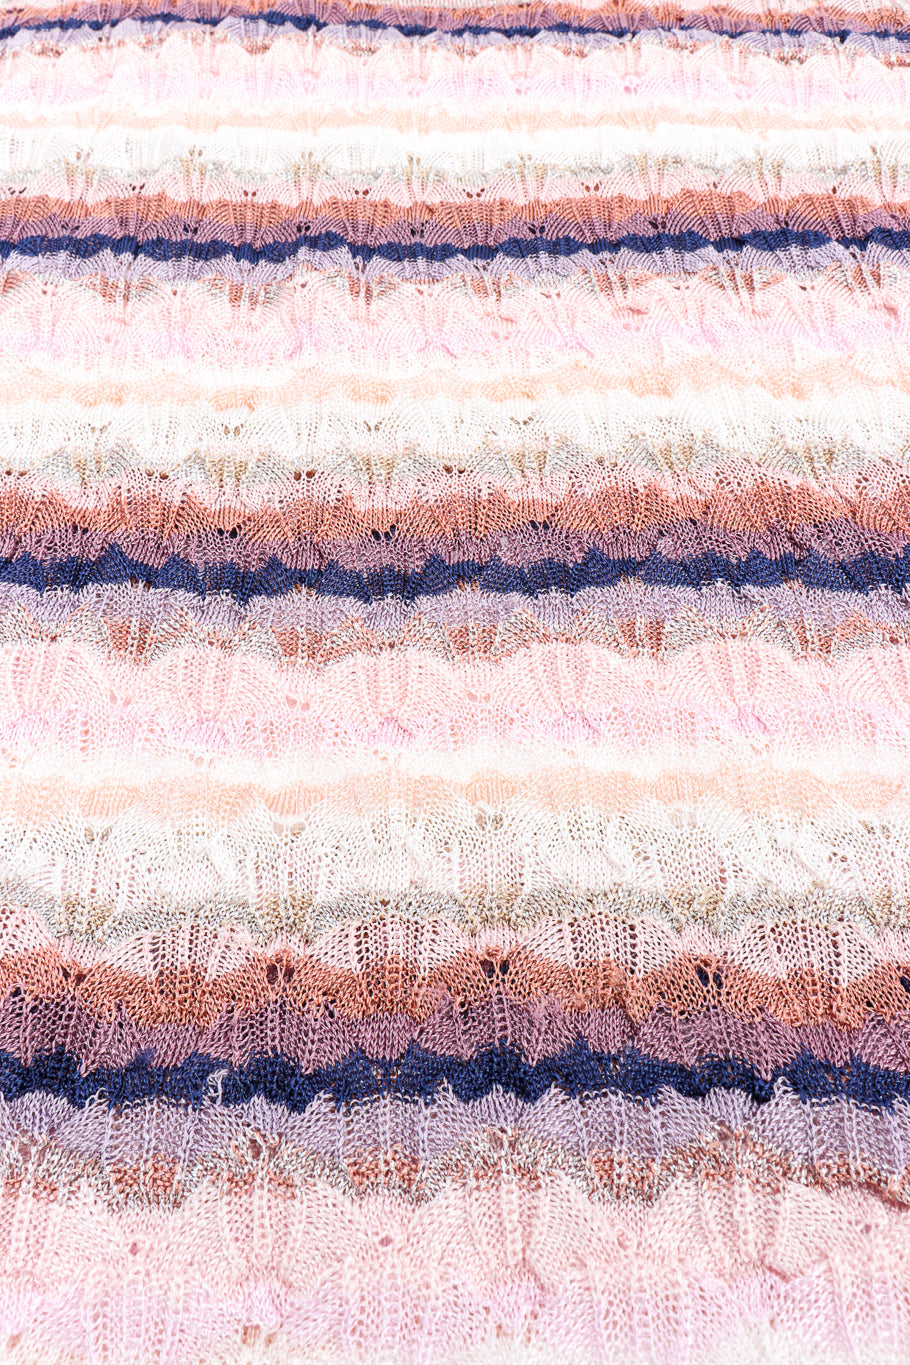 Missoni Striped Knit Duster, Tank, and Pants Set tan fabric closeup @Recessla